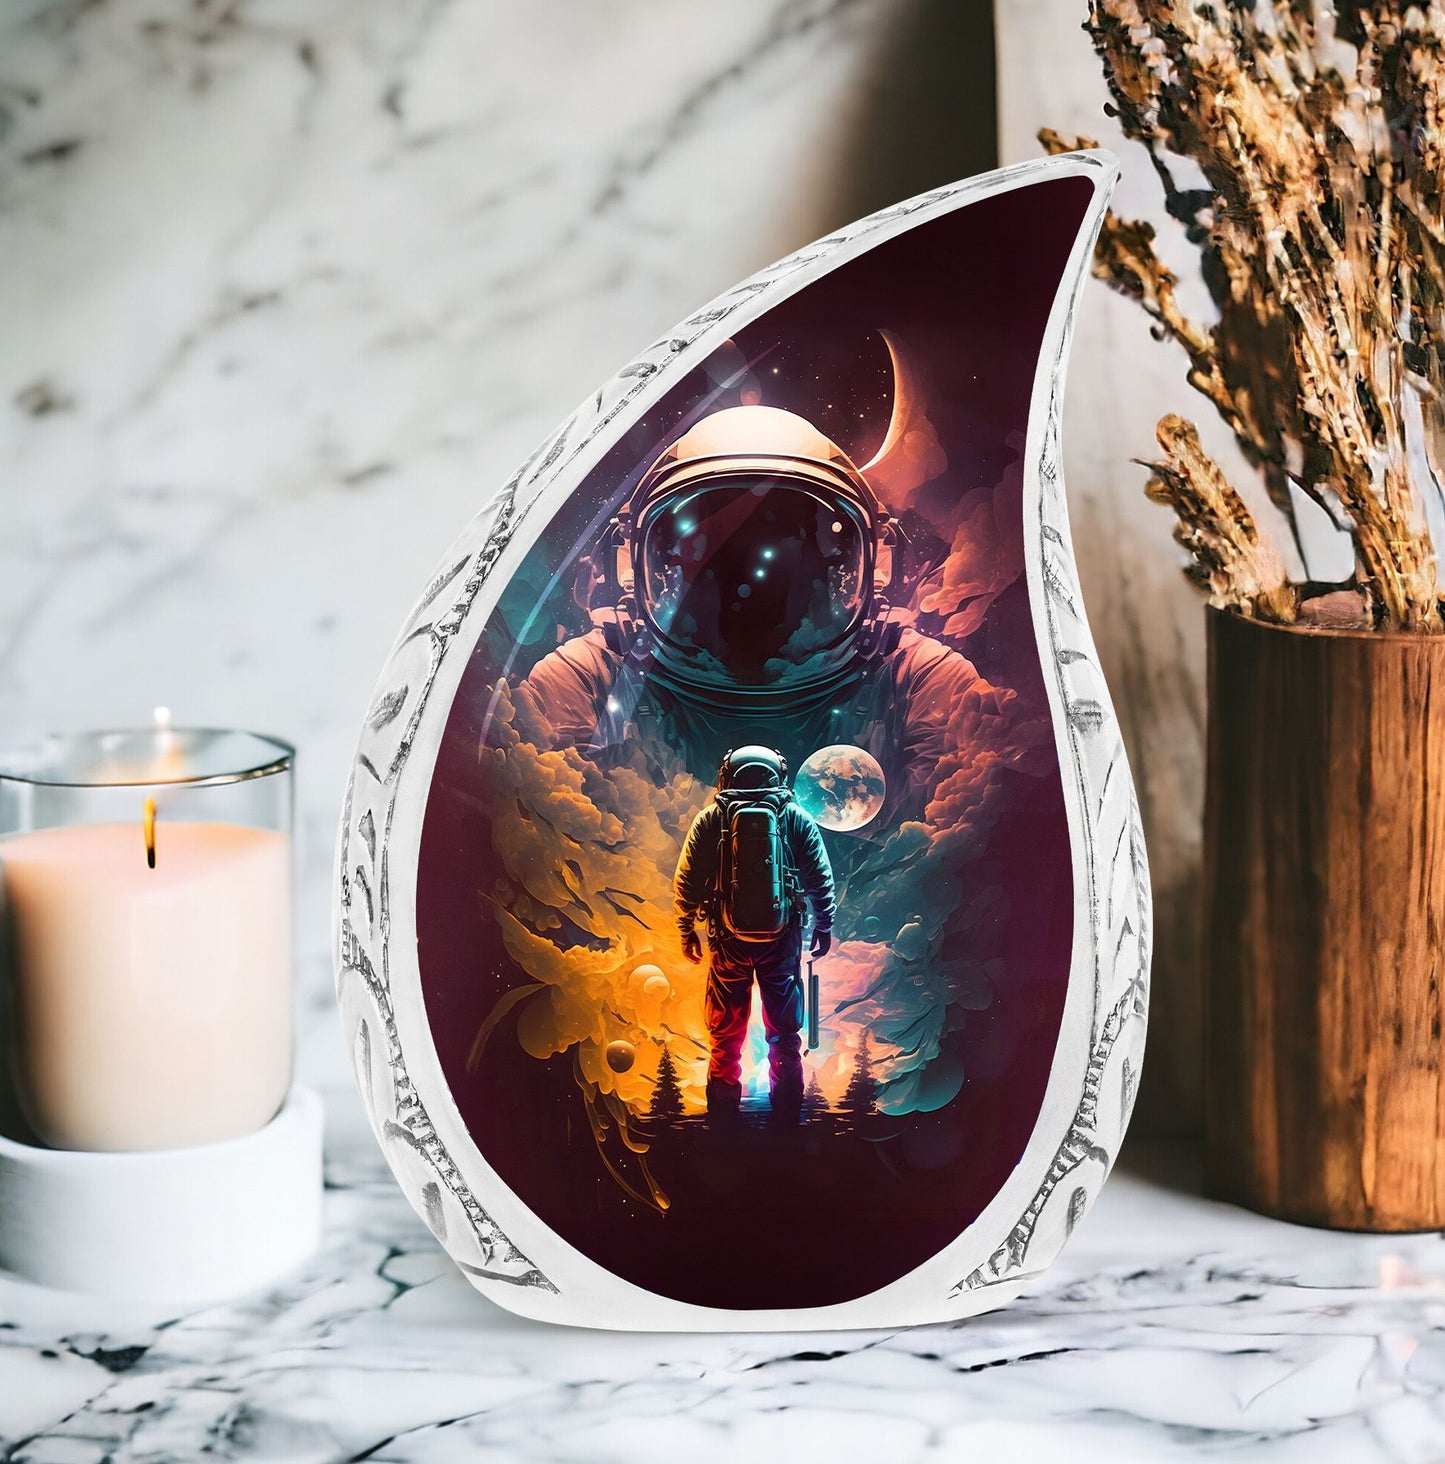 Large cremation urn featuring astronaut space suit designs, a unique vase for human ashes